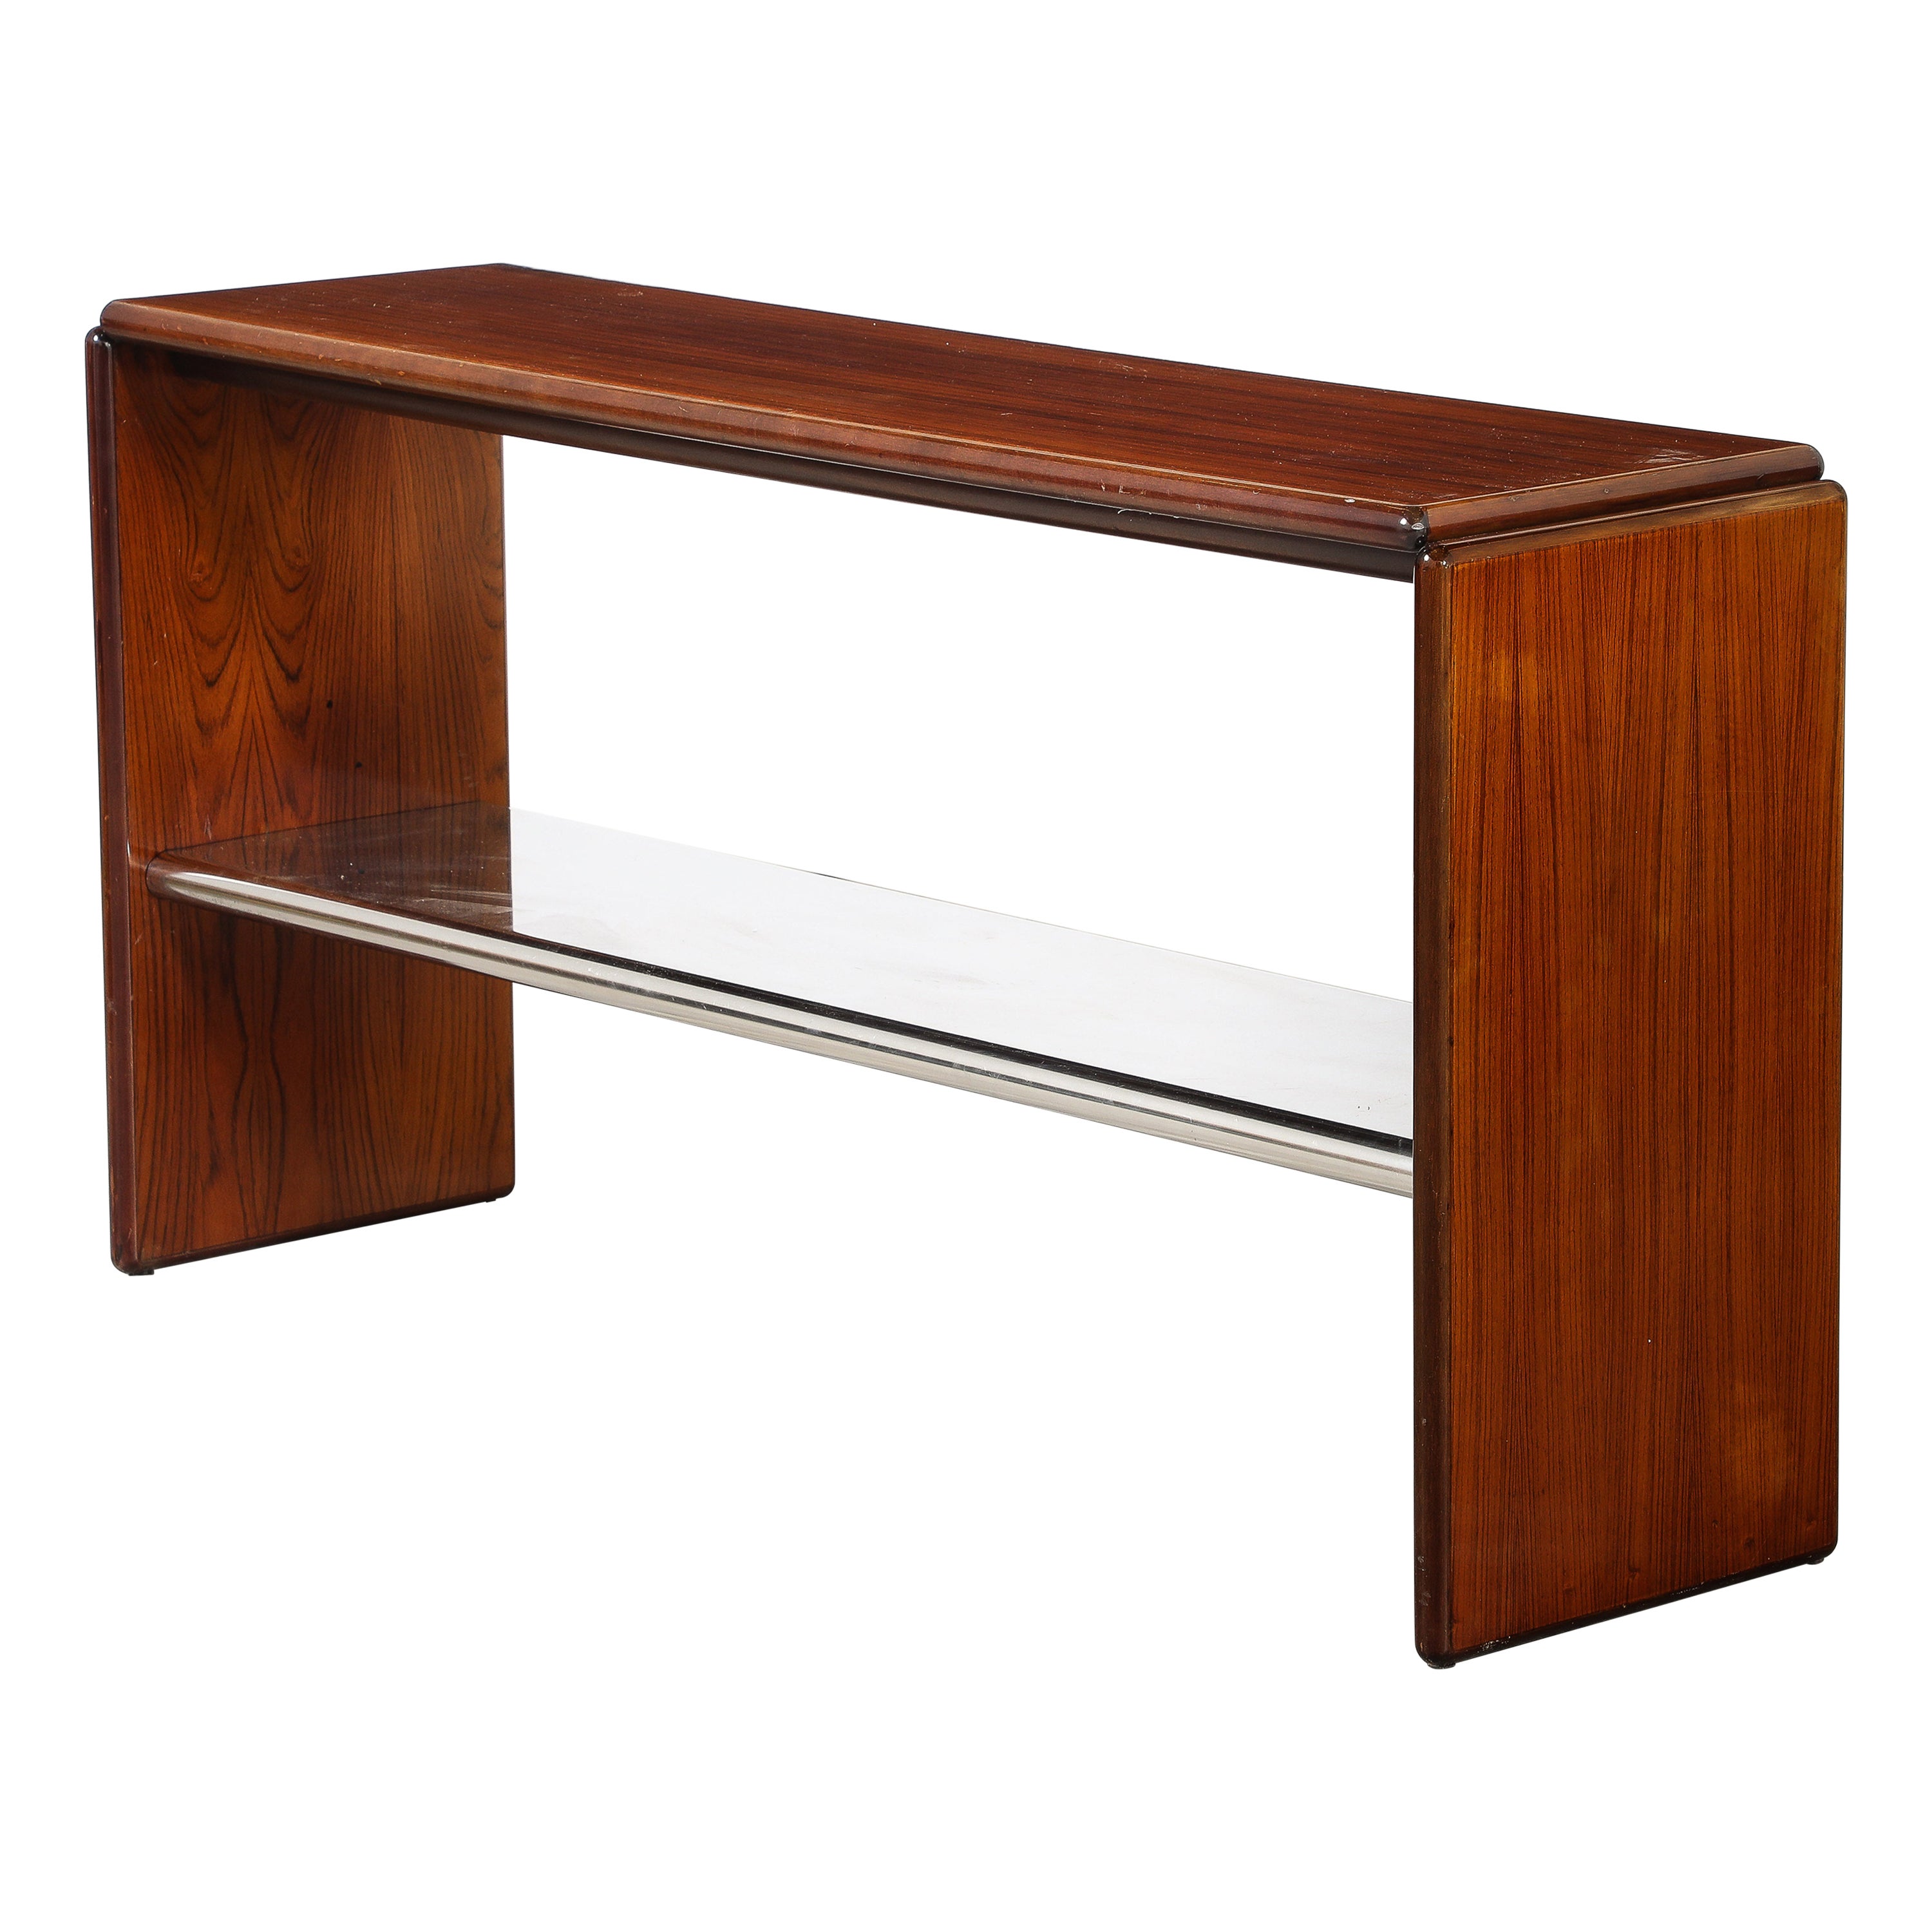 Table console moderniste italienne en bois et chrome, Italie, vers 1960